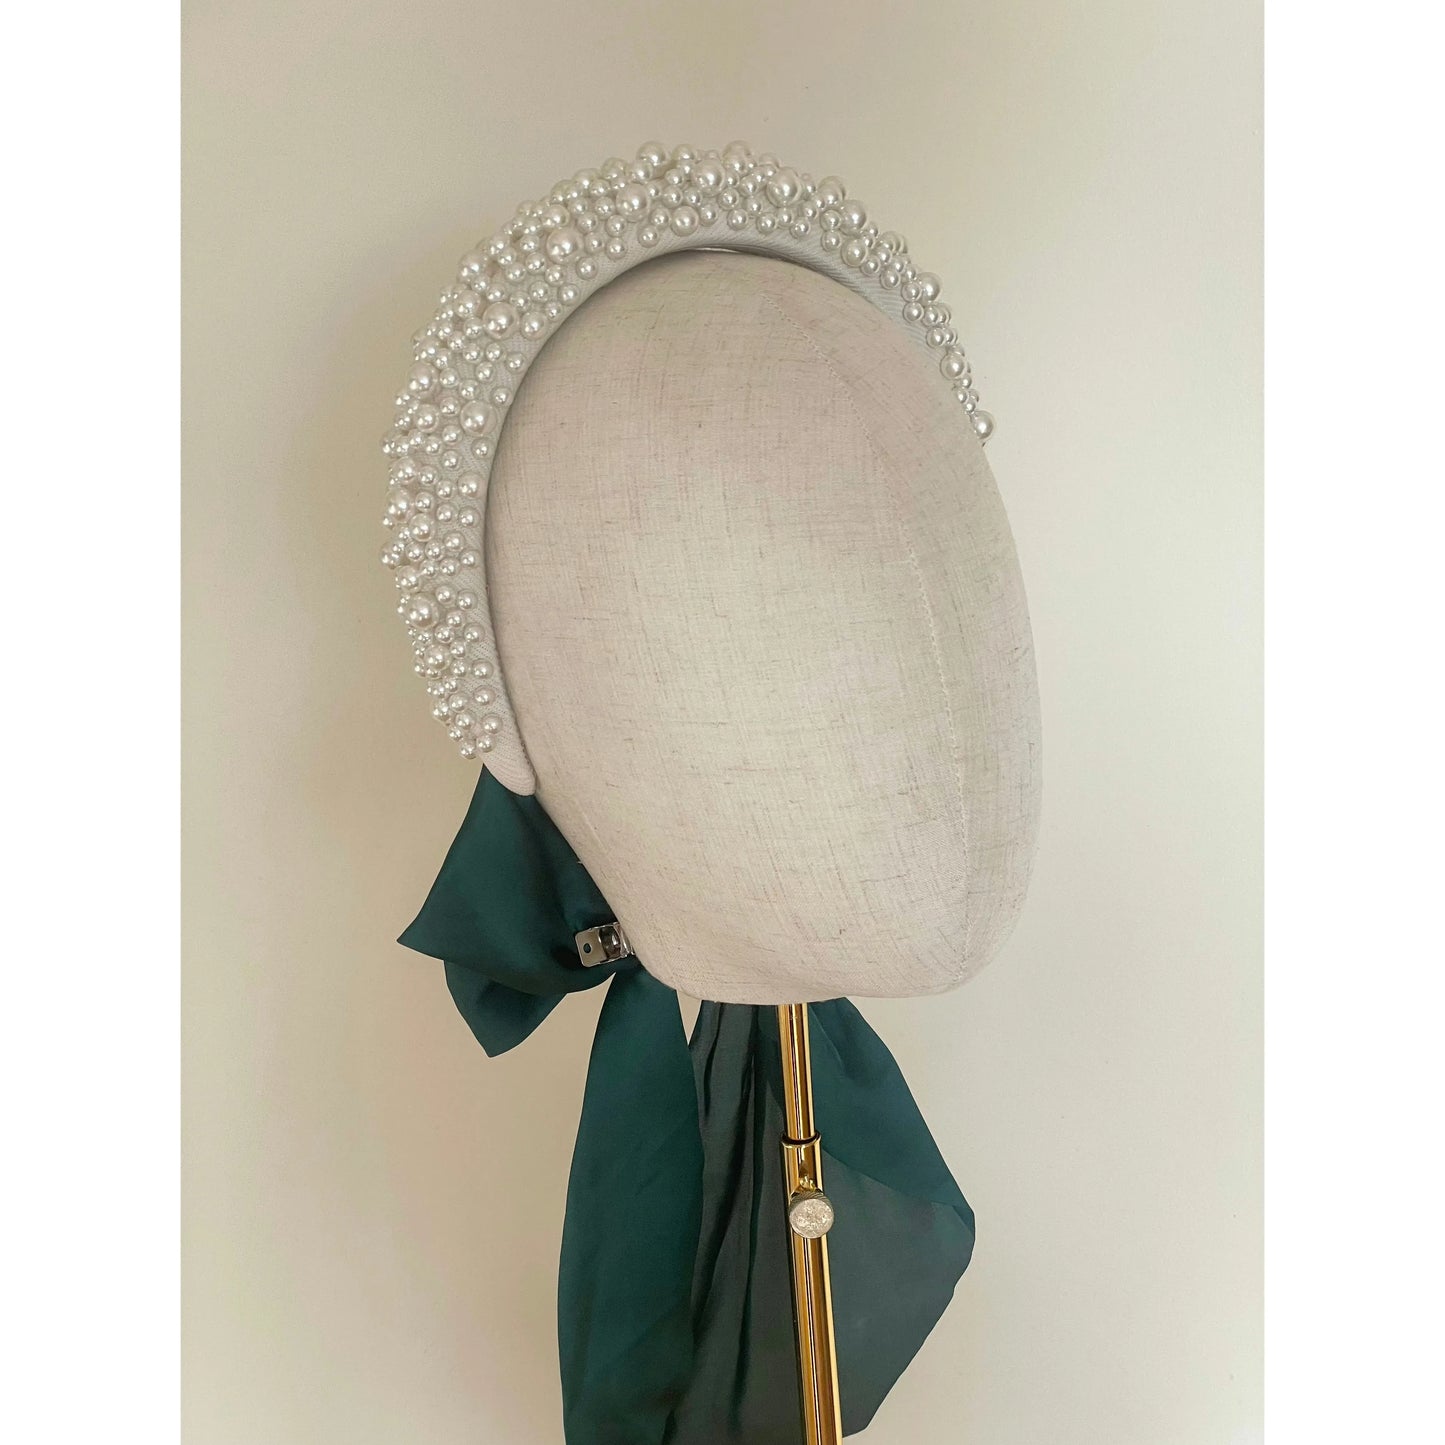 Pearl headband with Emerald bow